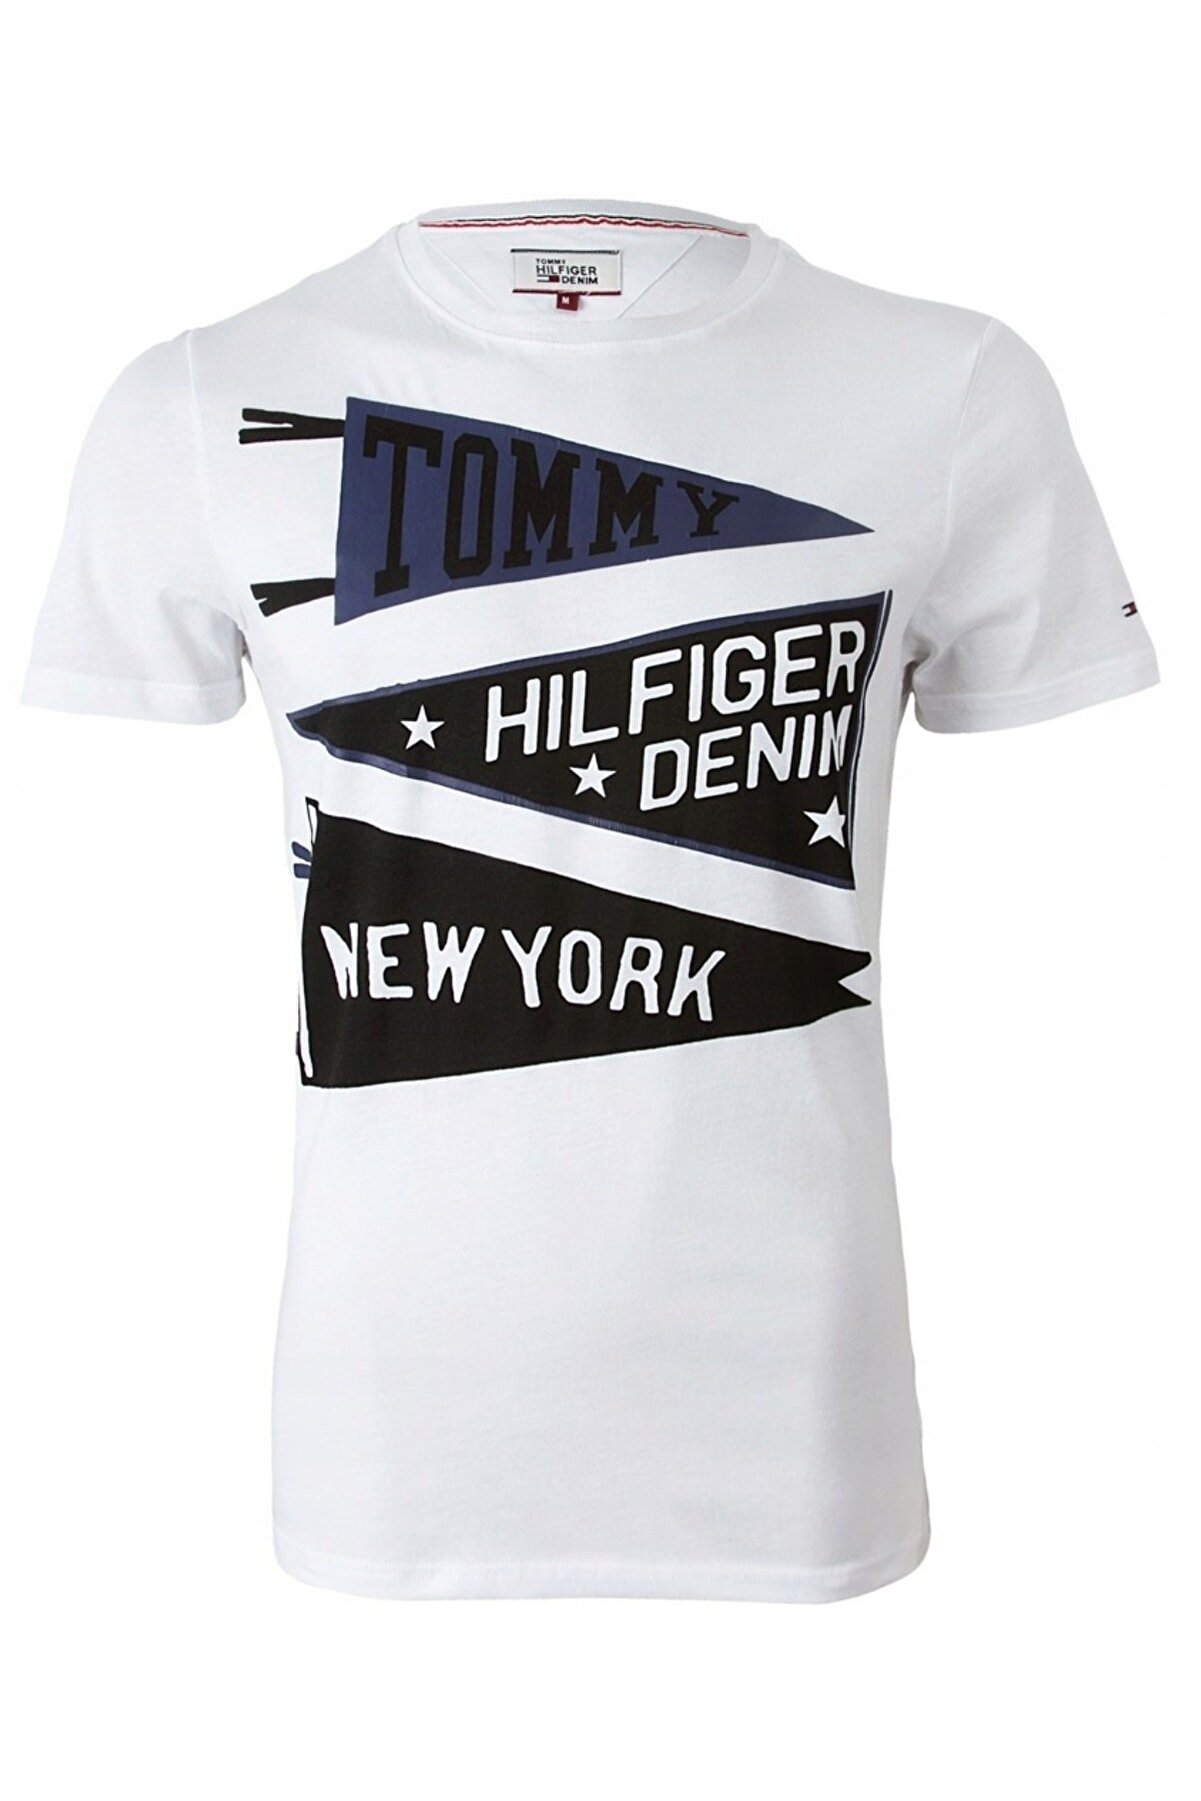 Tommy Hilfiger Denim New York T-shirt Dm0dm02959